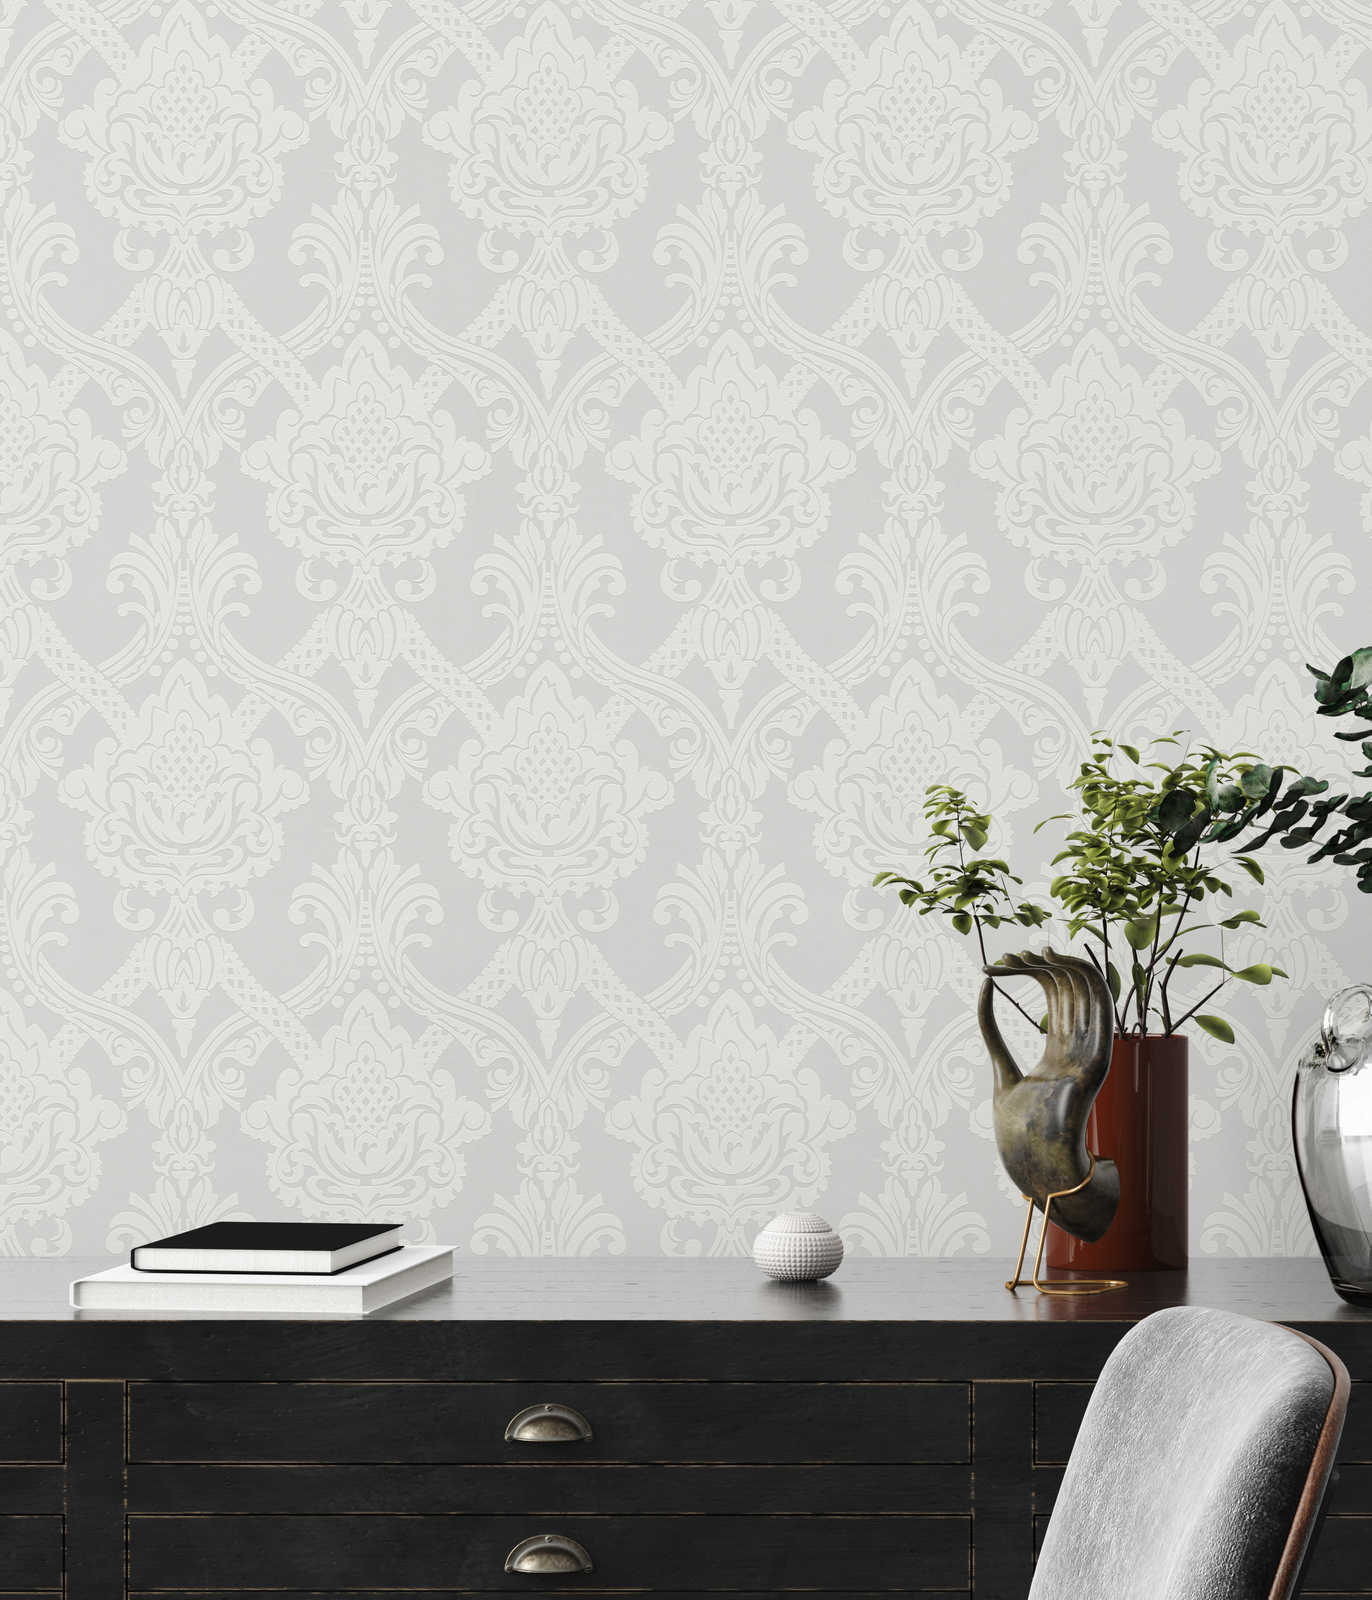             White wallpaper baroque design with metallic effect
        